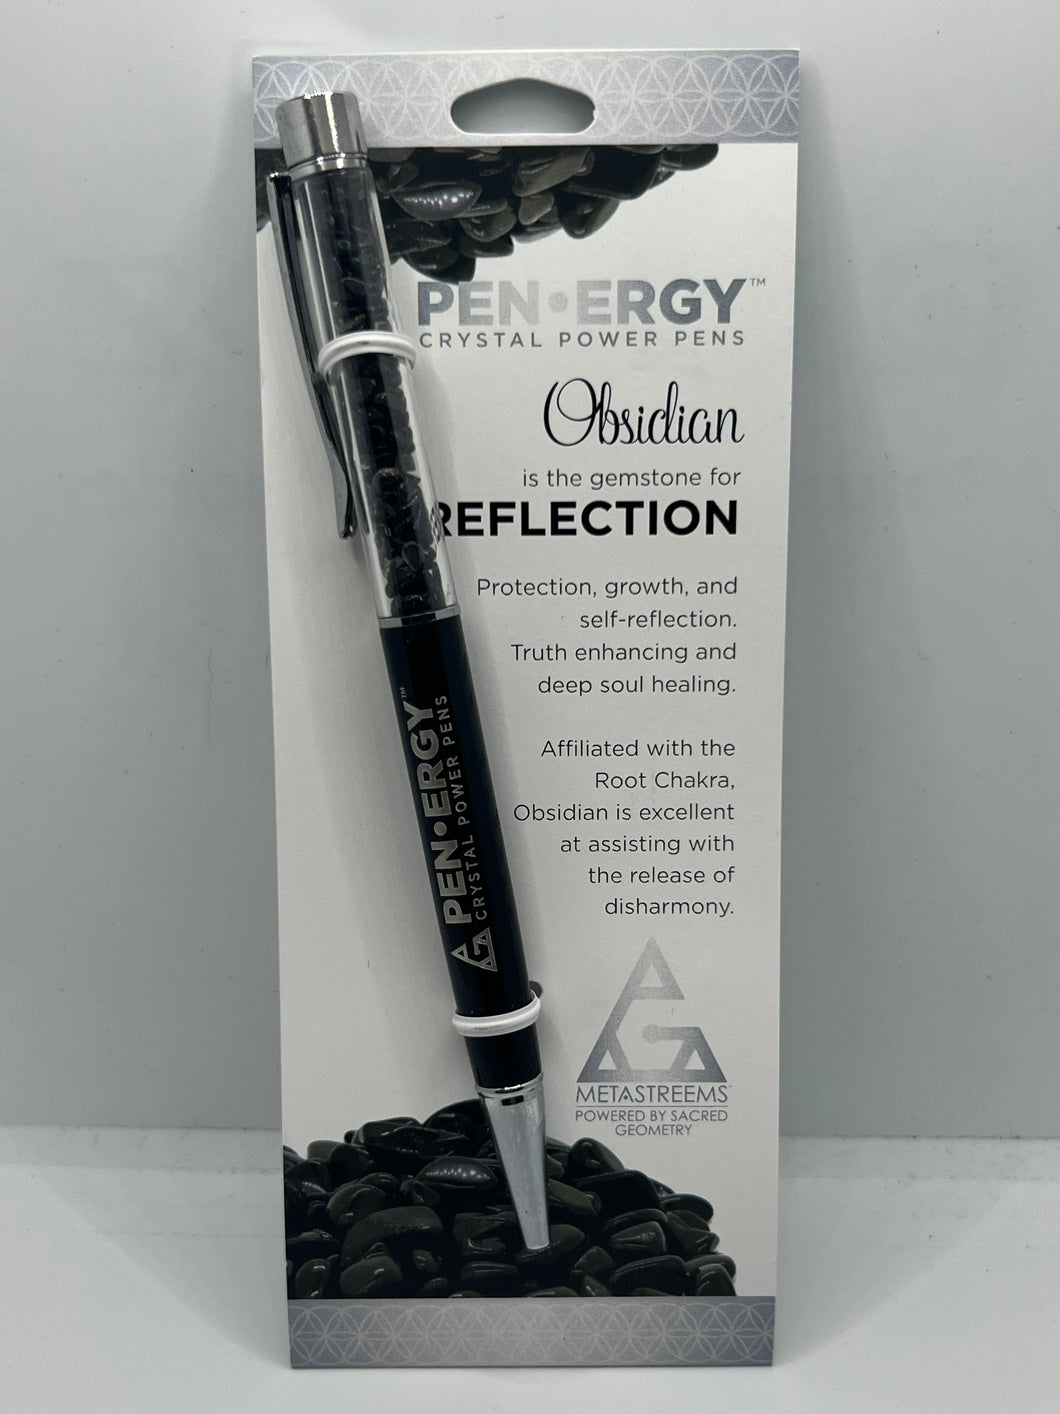 PEN - ERGY Reflection (Obsidian) 